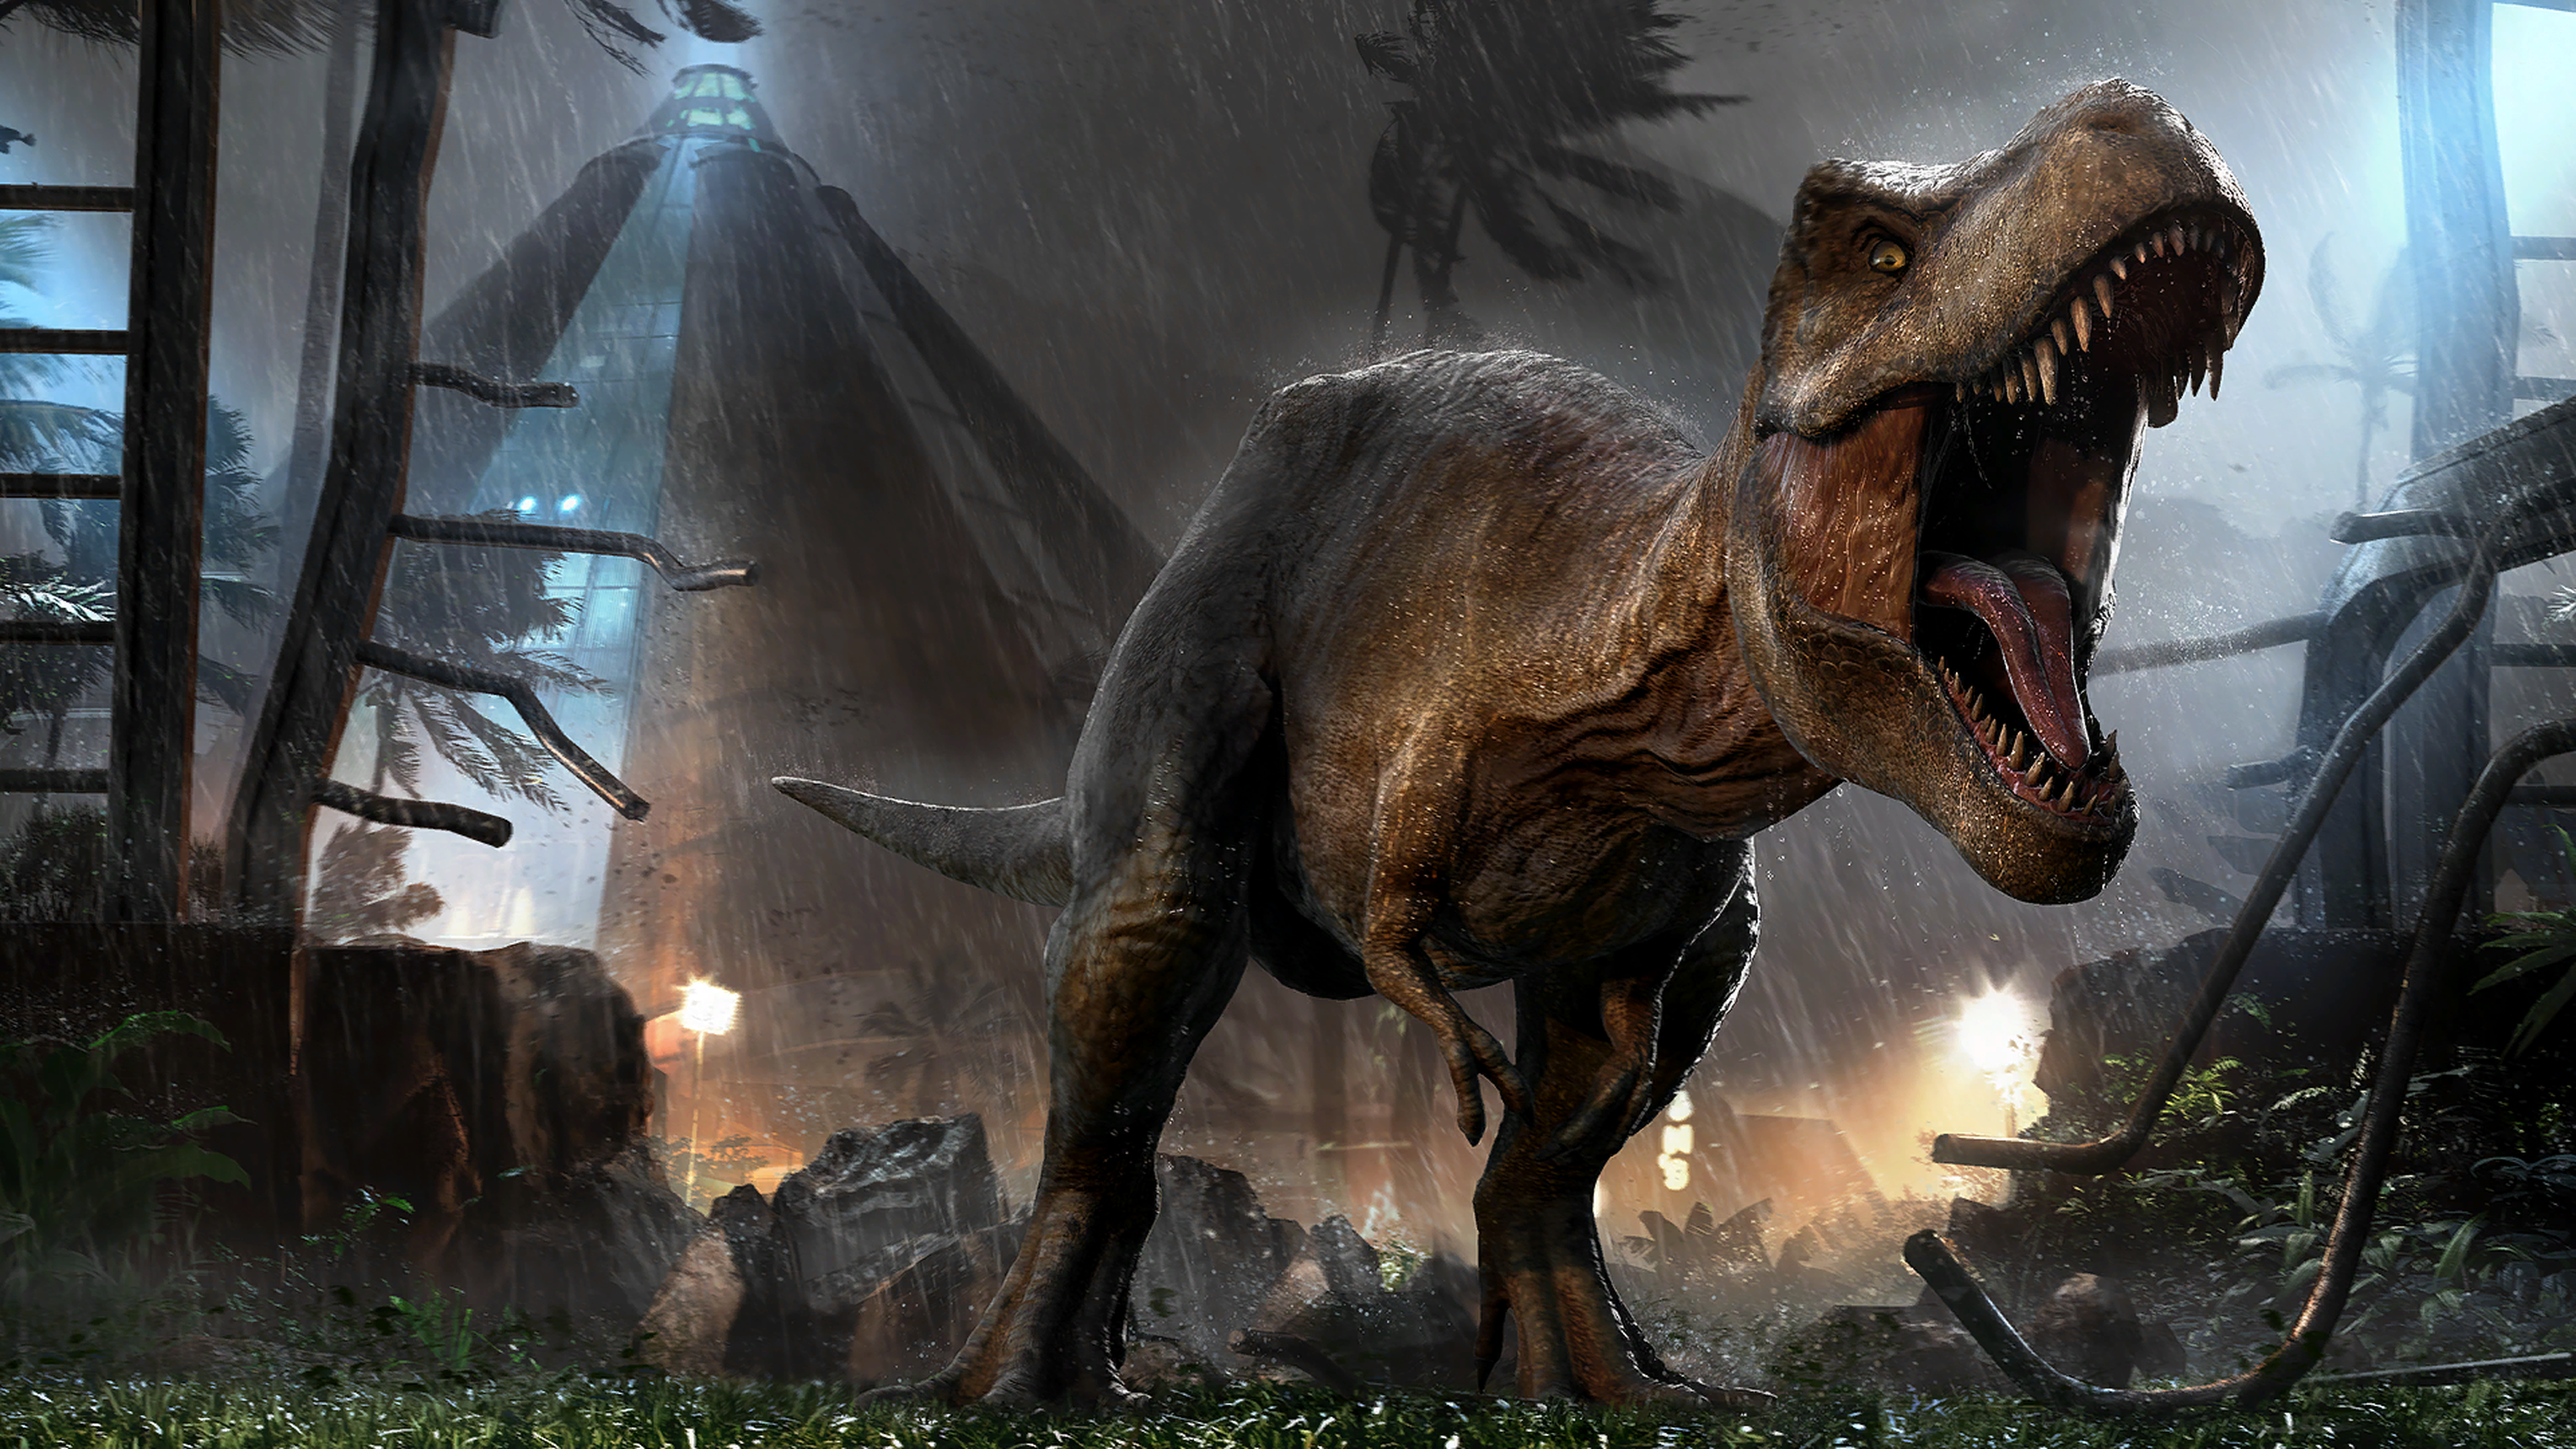 Dinosaur HD Wallpaper Free download